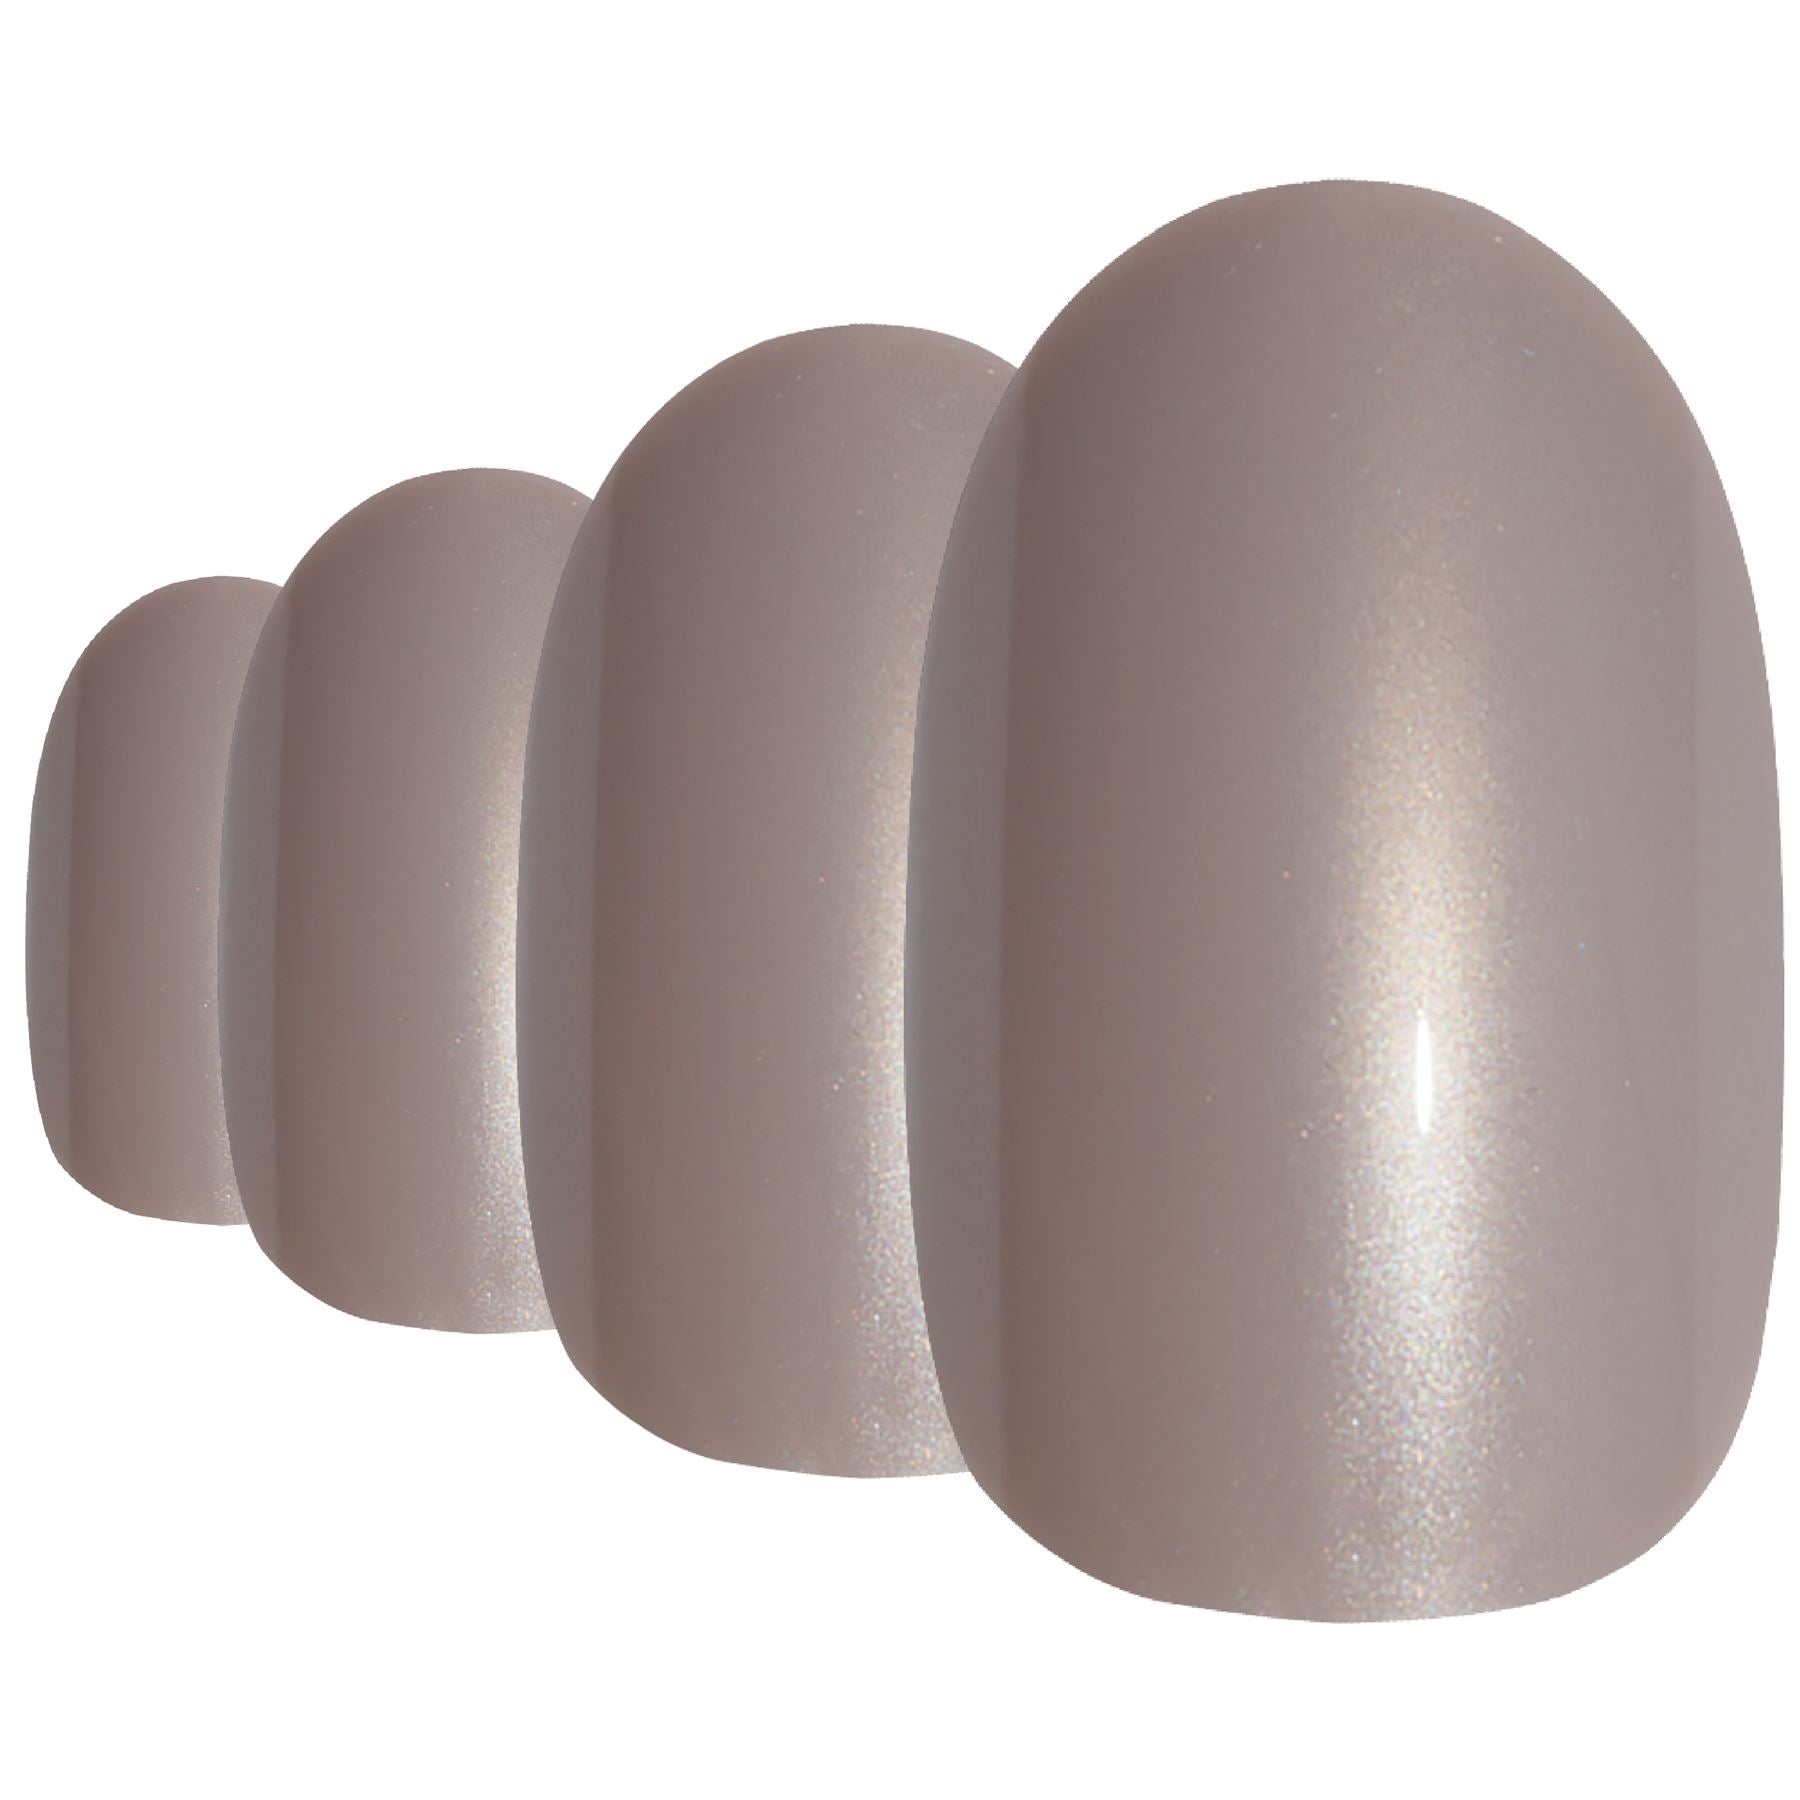 False Nails by Bling Art Beige Glitter Oval Medium Fake Acrylic 24 Tips with Glue